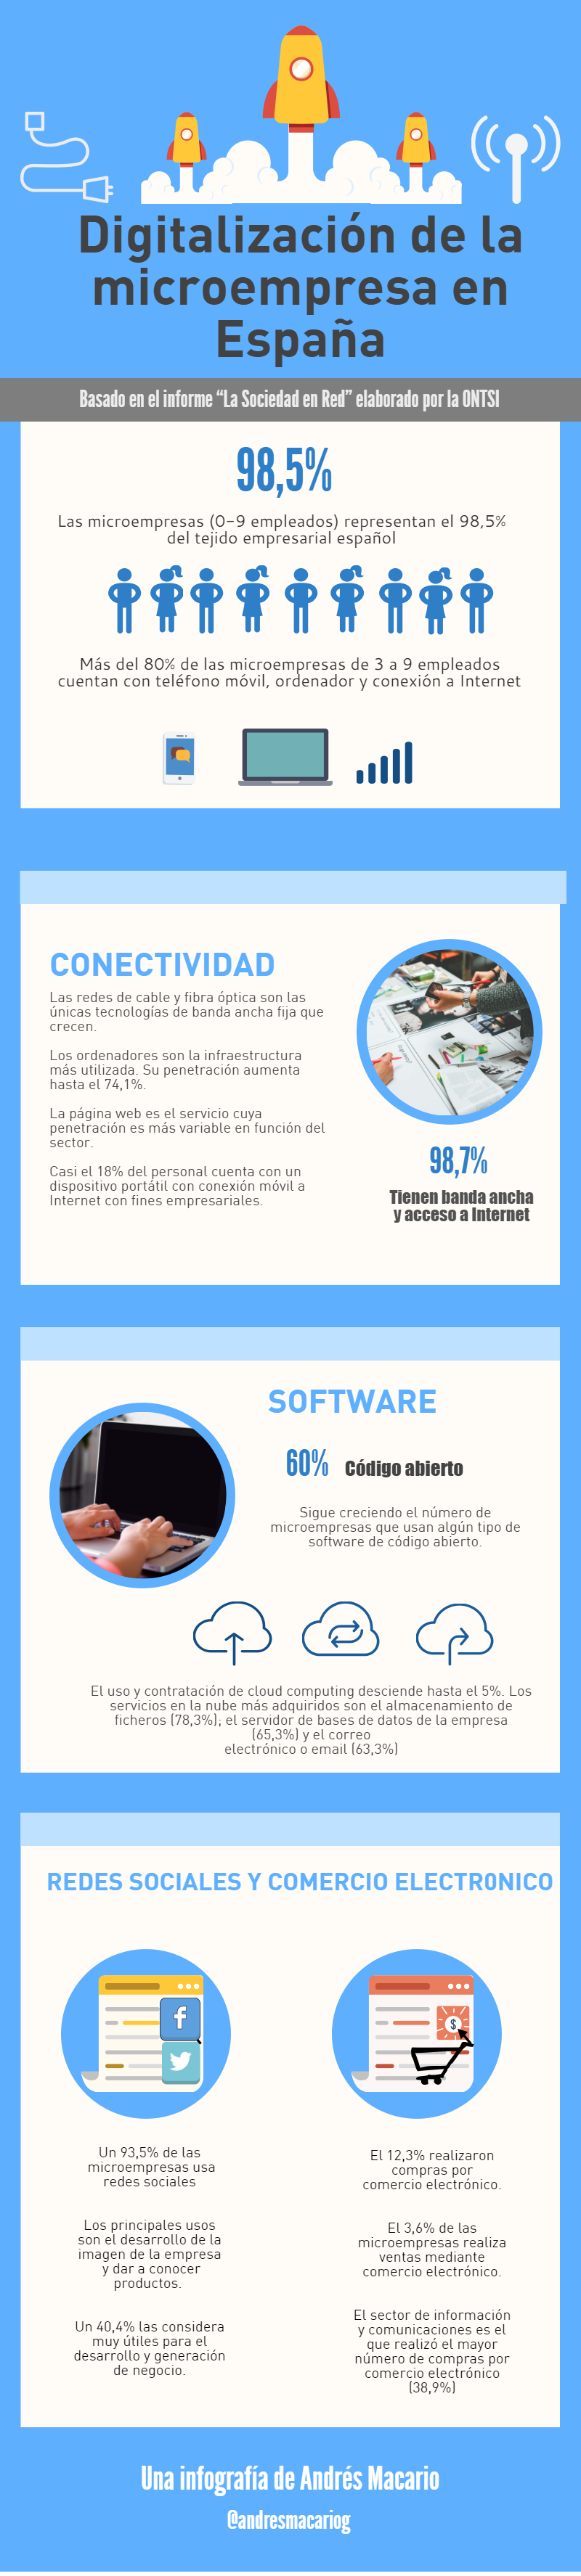 Digitalizacion de la microempresa en España - Infografia Andres Macario